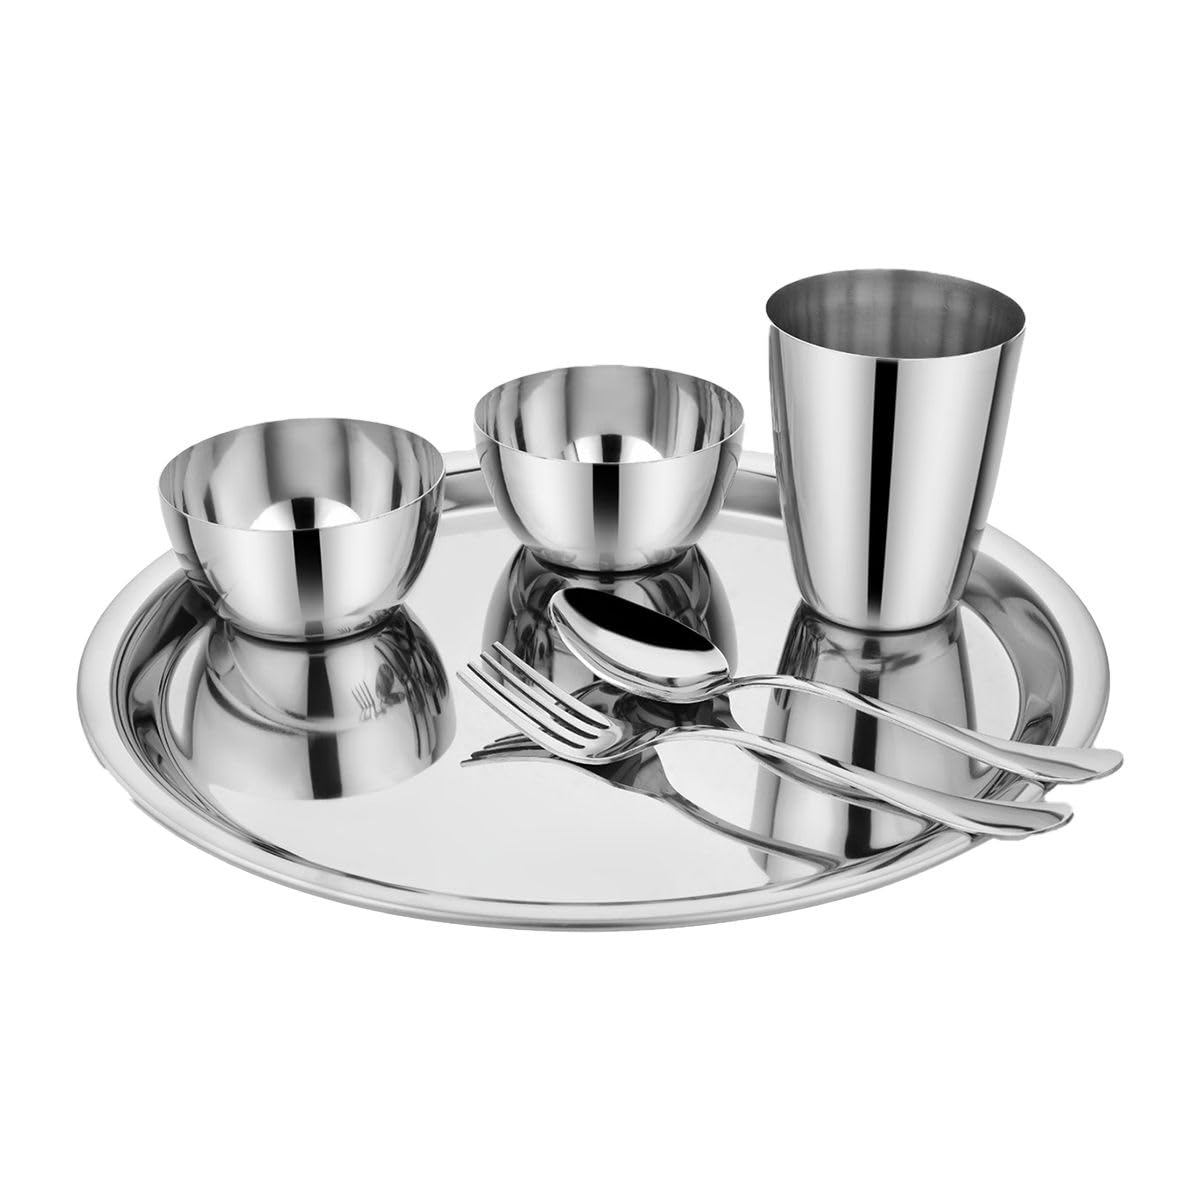 “Regal” Stainless Steel Thali Set/Dinner Set of 6 pcs (Silver)